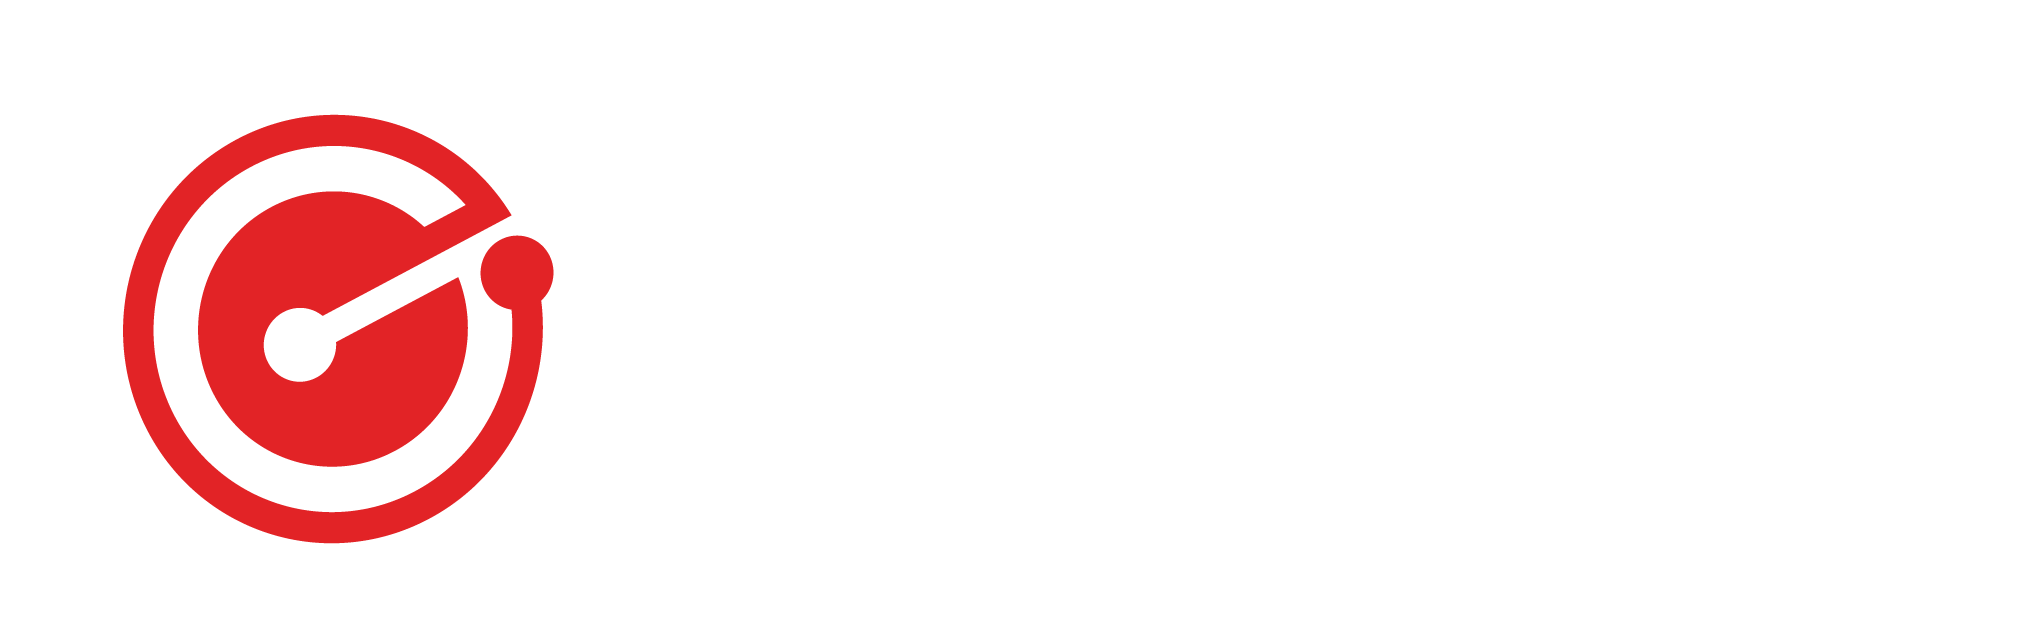 creative digital group